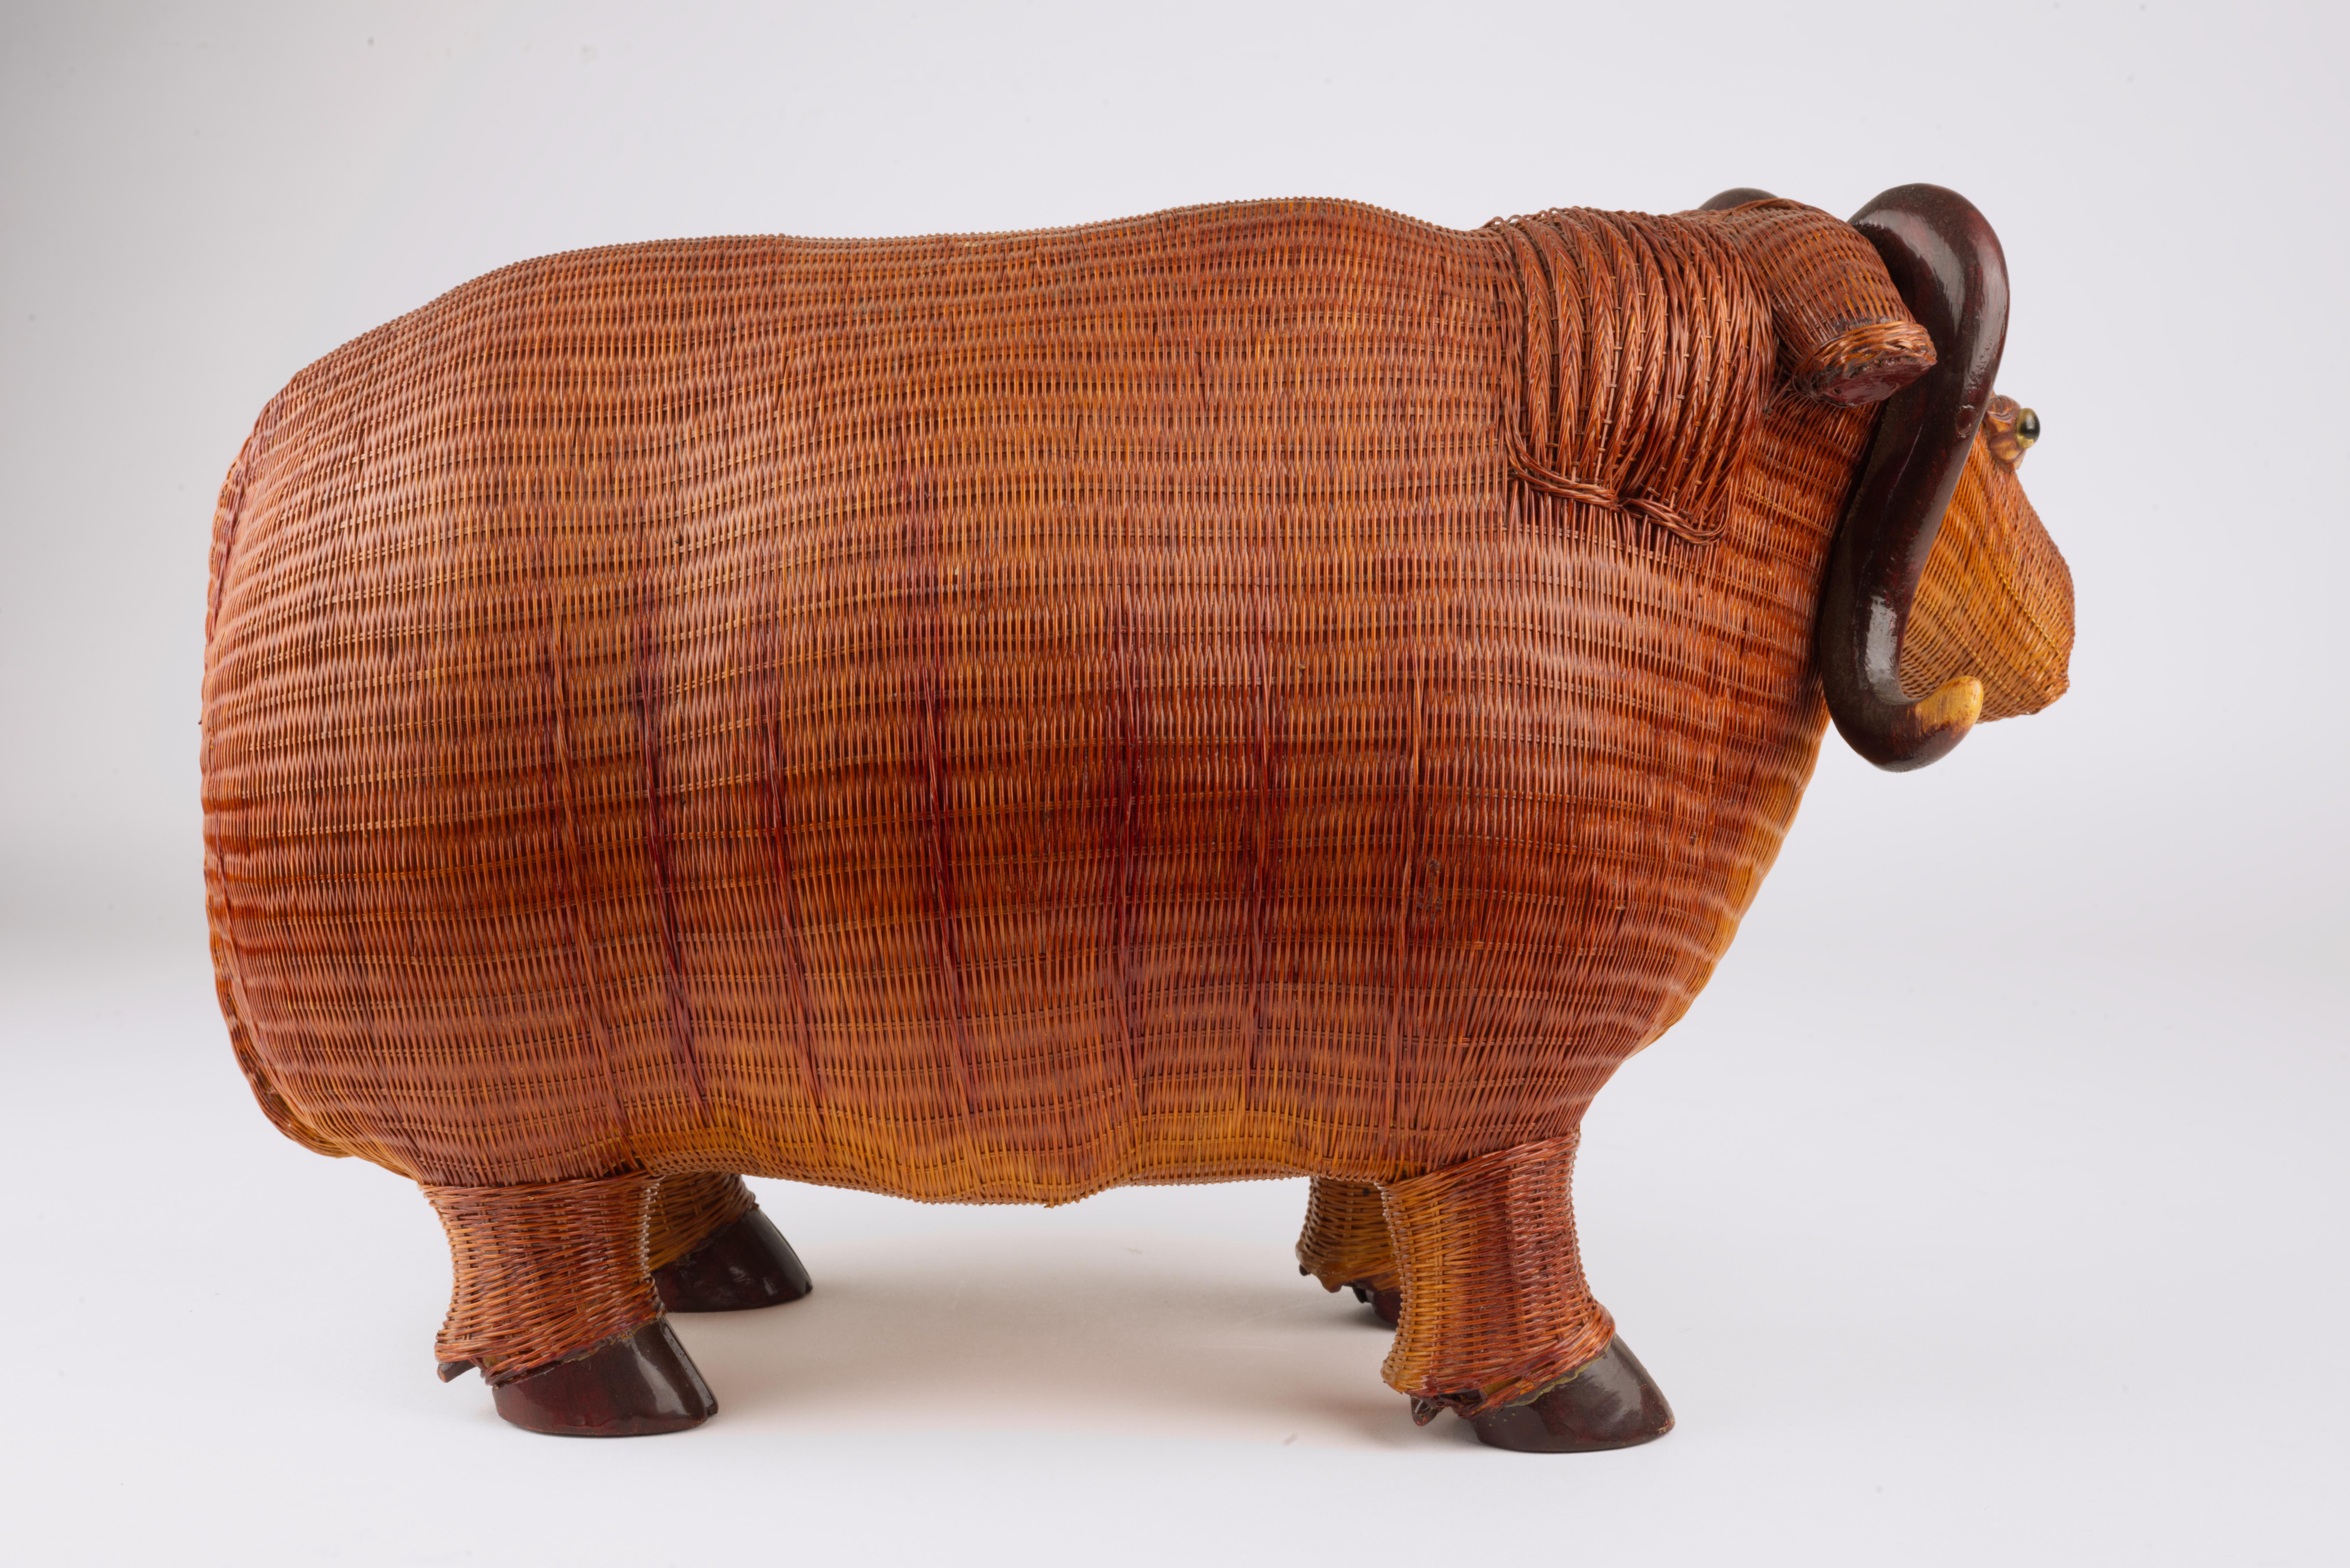 Hand-Woven Wicker Water Buffalo Figurine by Shanghai Handicrafts For Sale